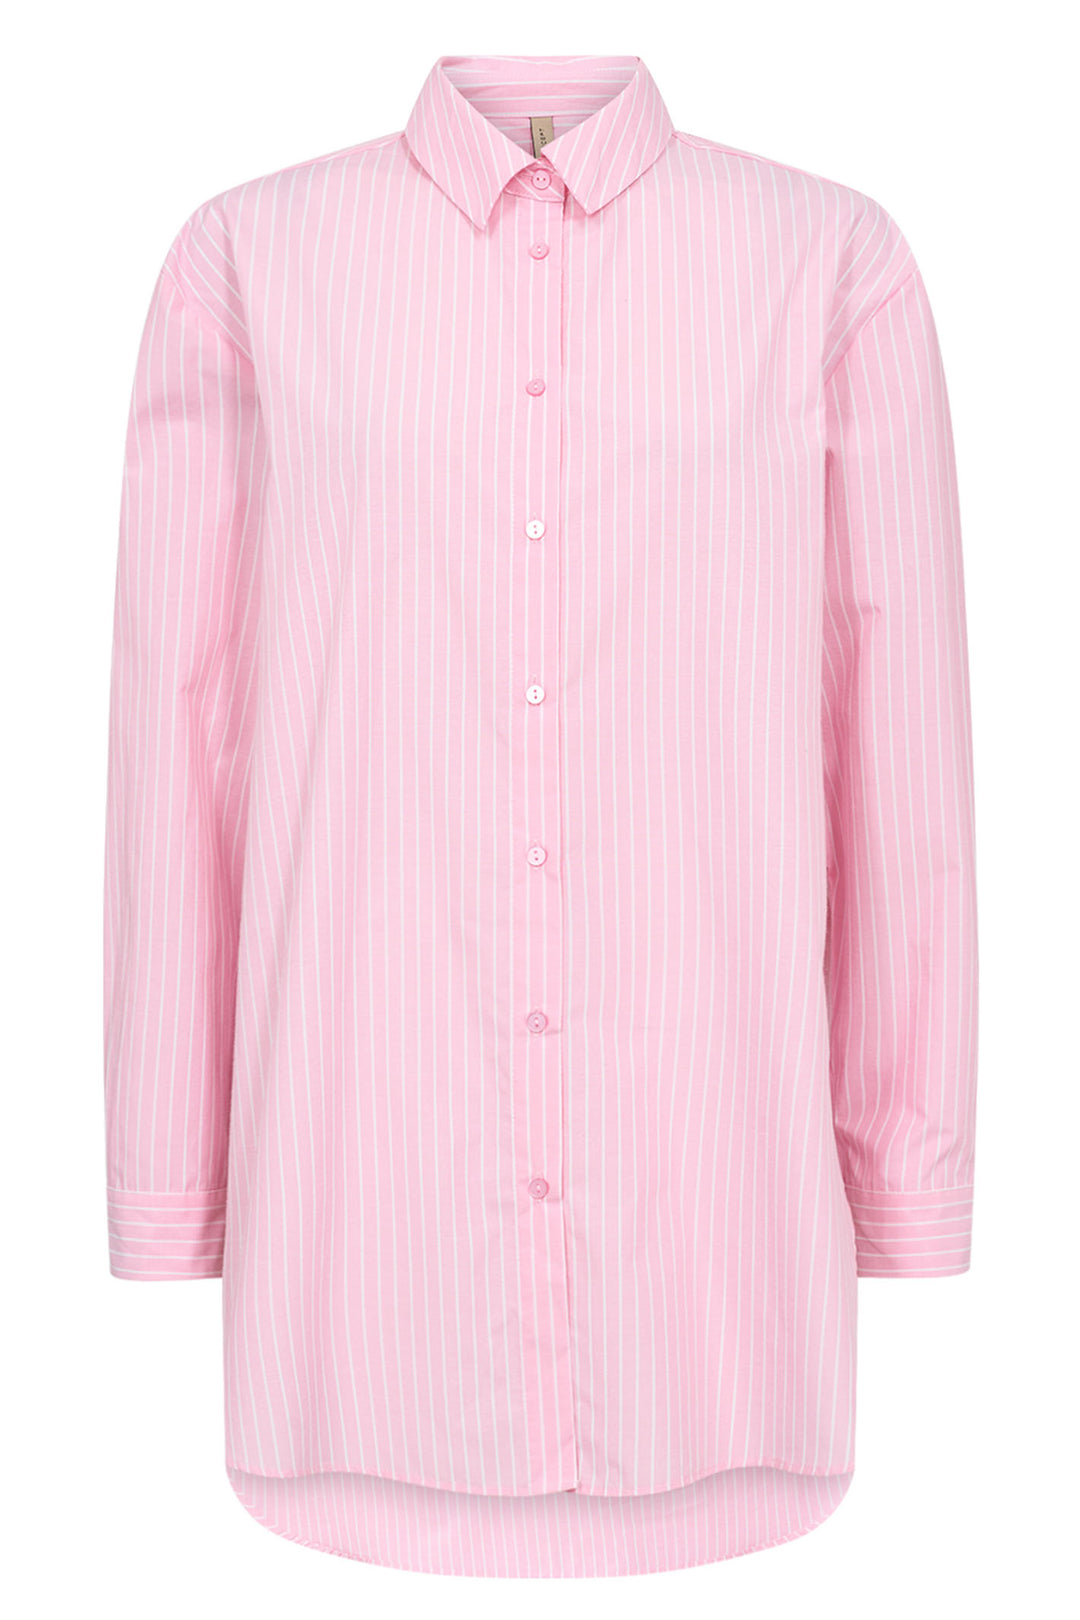 Soya Concept 40529-20 4615-8B SC-Dicle 2 Pink Striped Shirt - Dotique